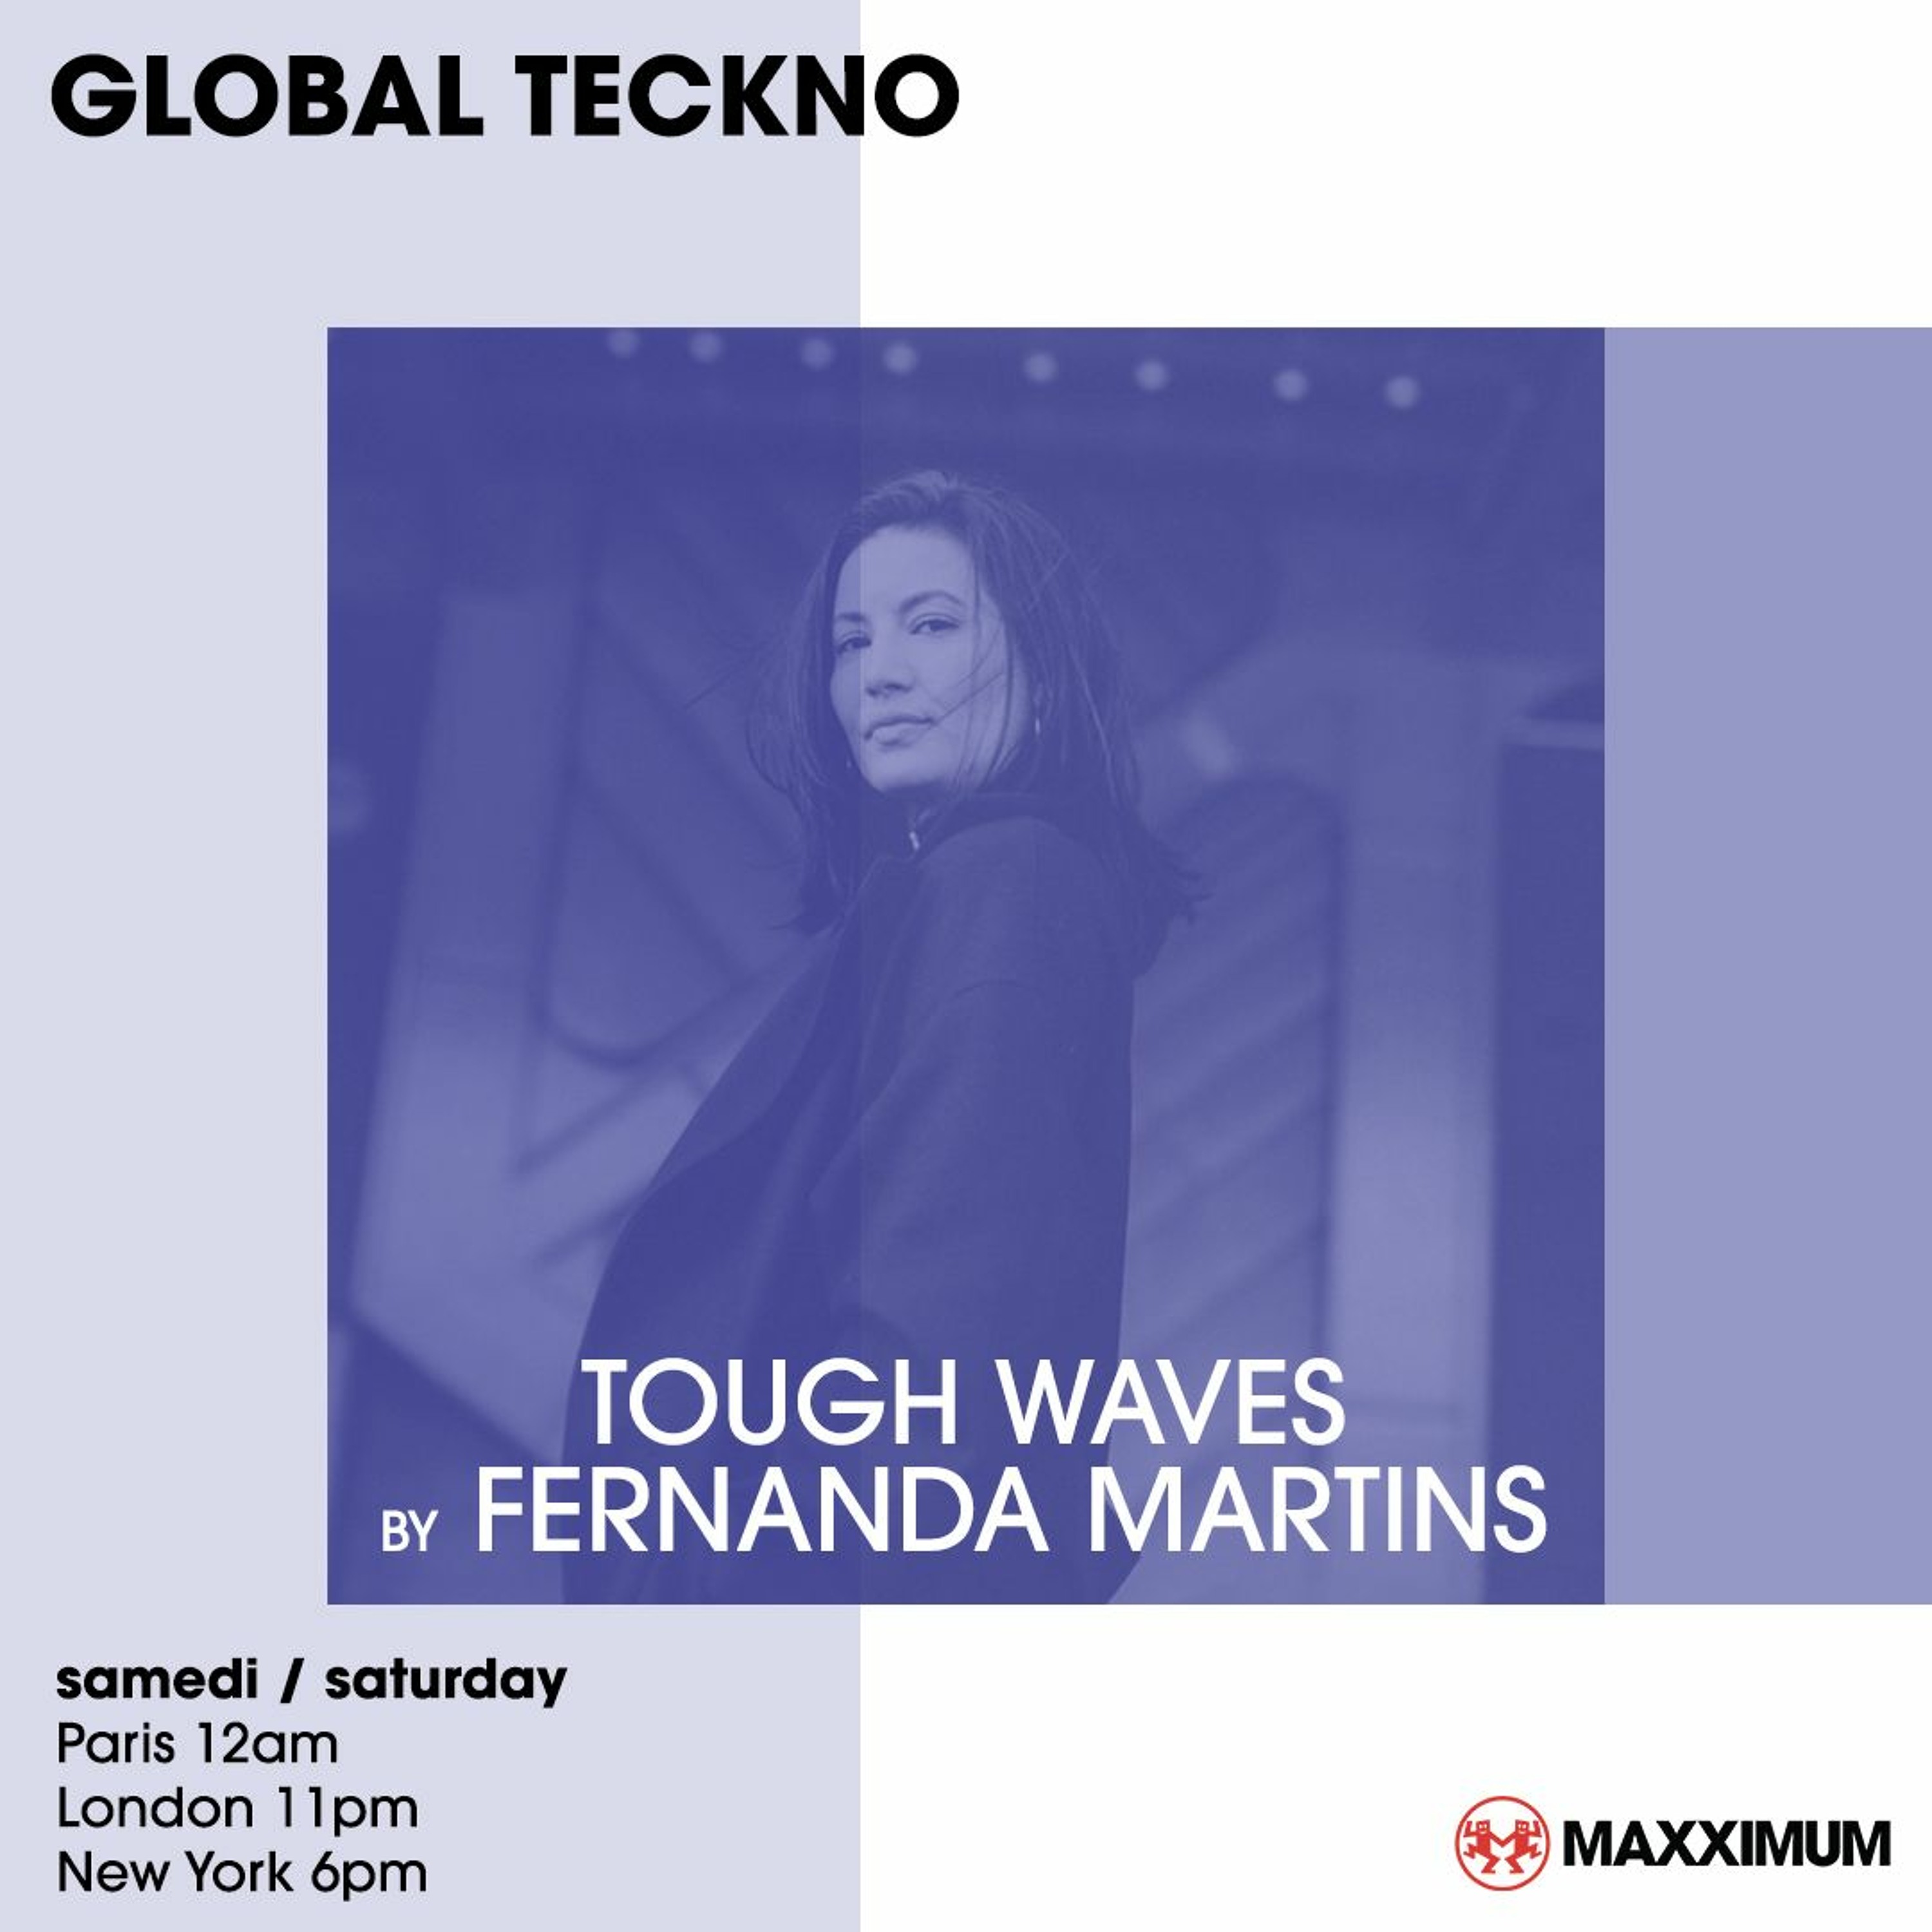 Tough Waves by Fernanda Martins - Episode 8